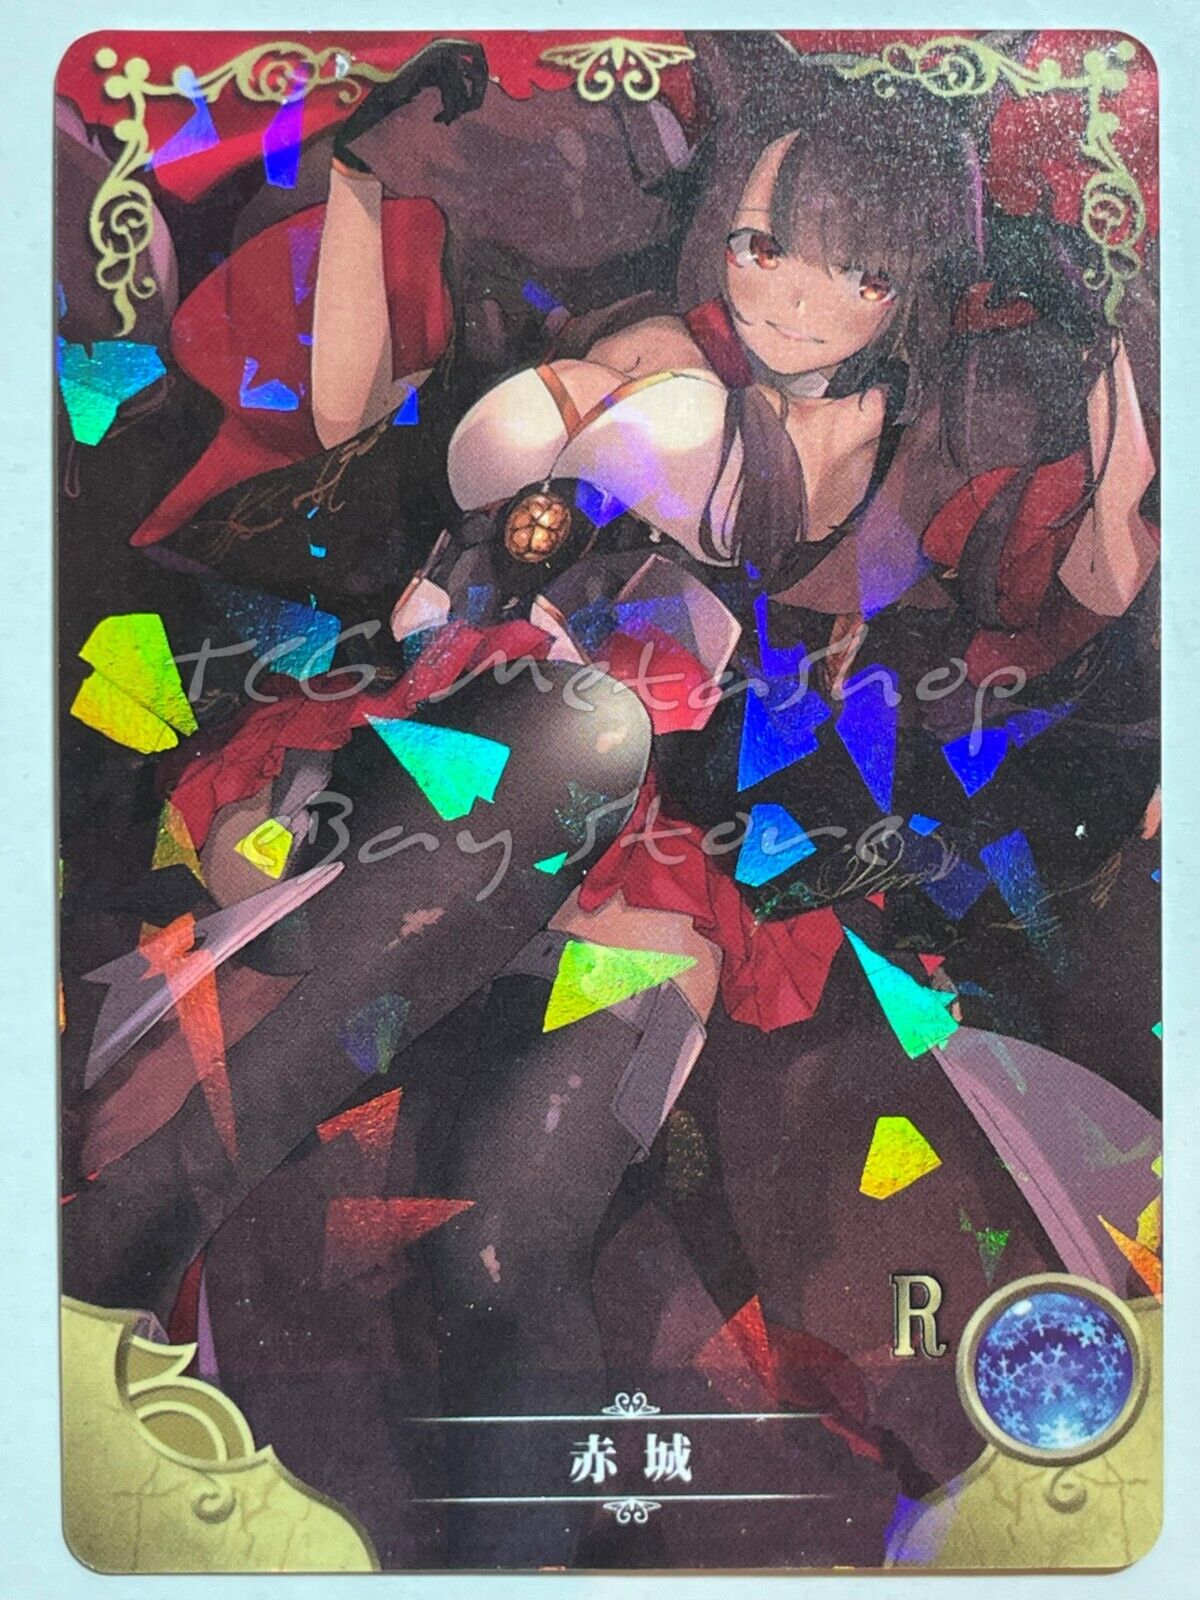 🔥 2m01 [Pick Your Singles R] Goddess Story Waifu Anime Doujin Cards 🔥